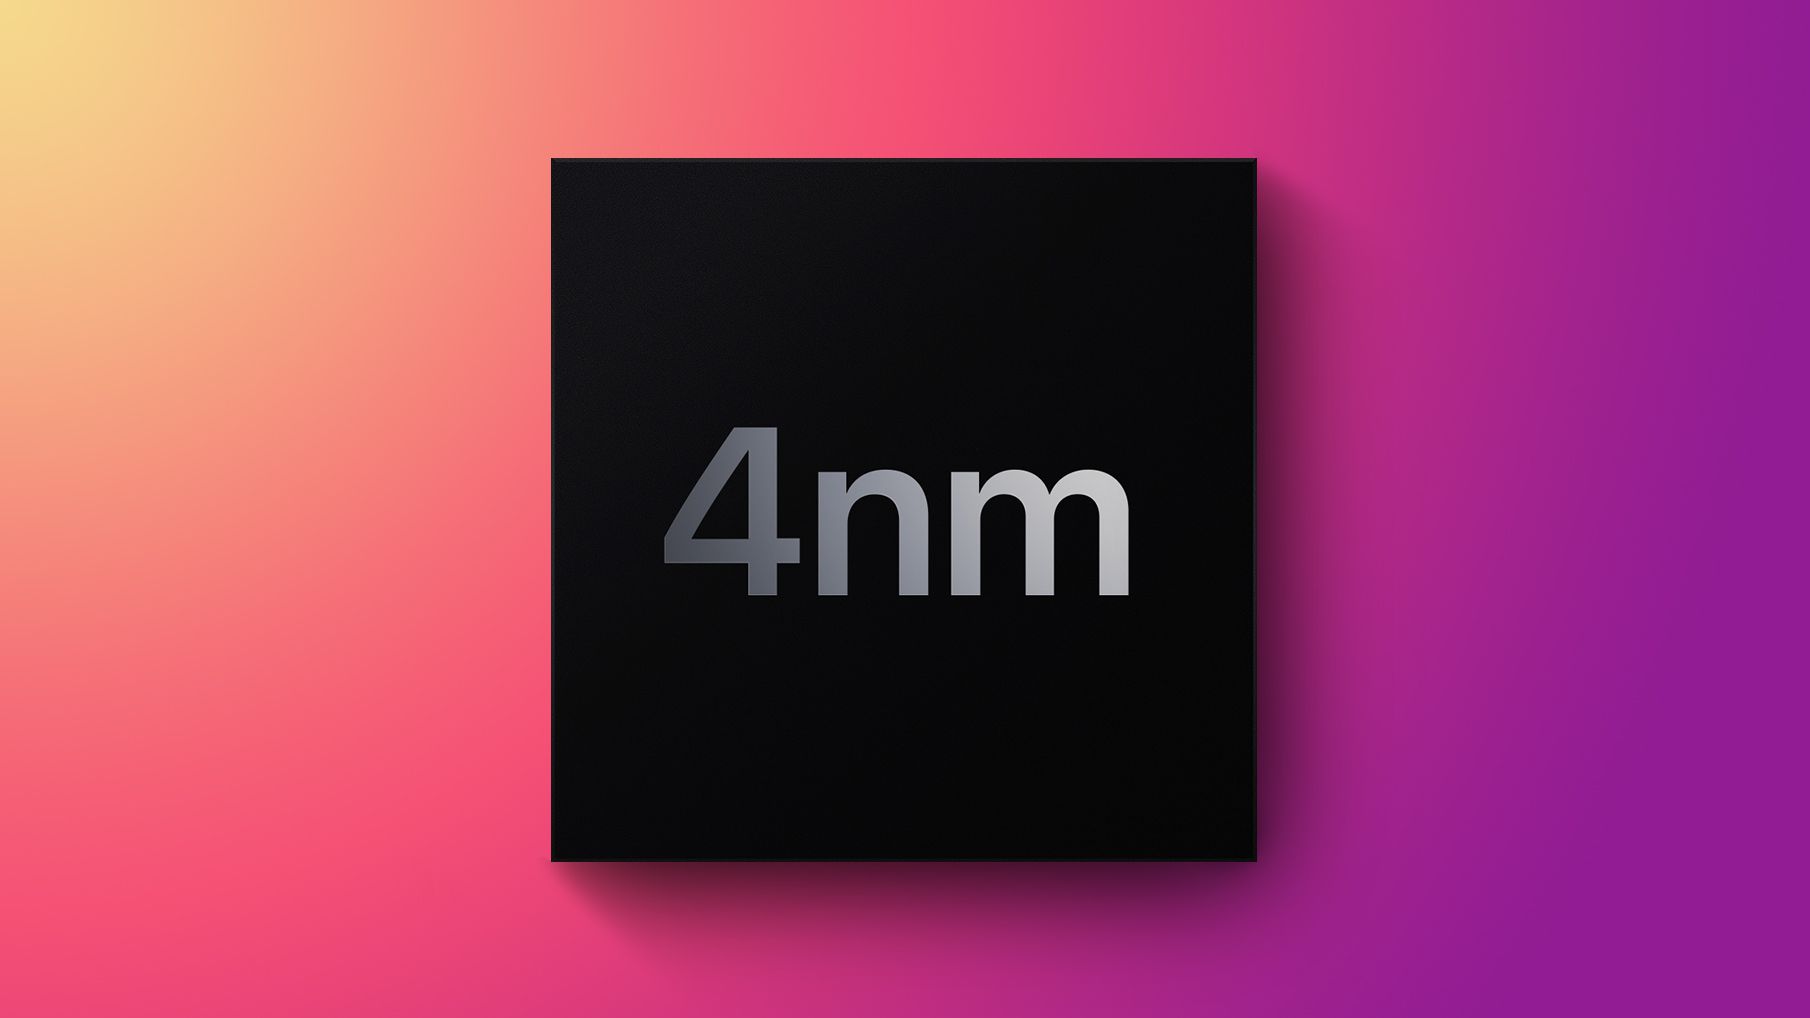 m1 4nm feature2.jpg